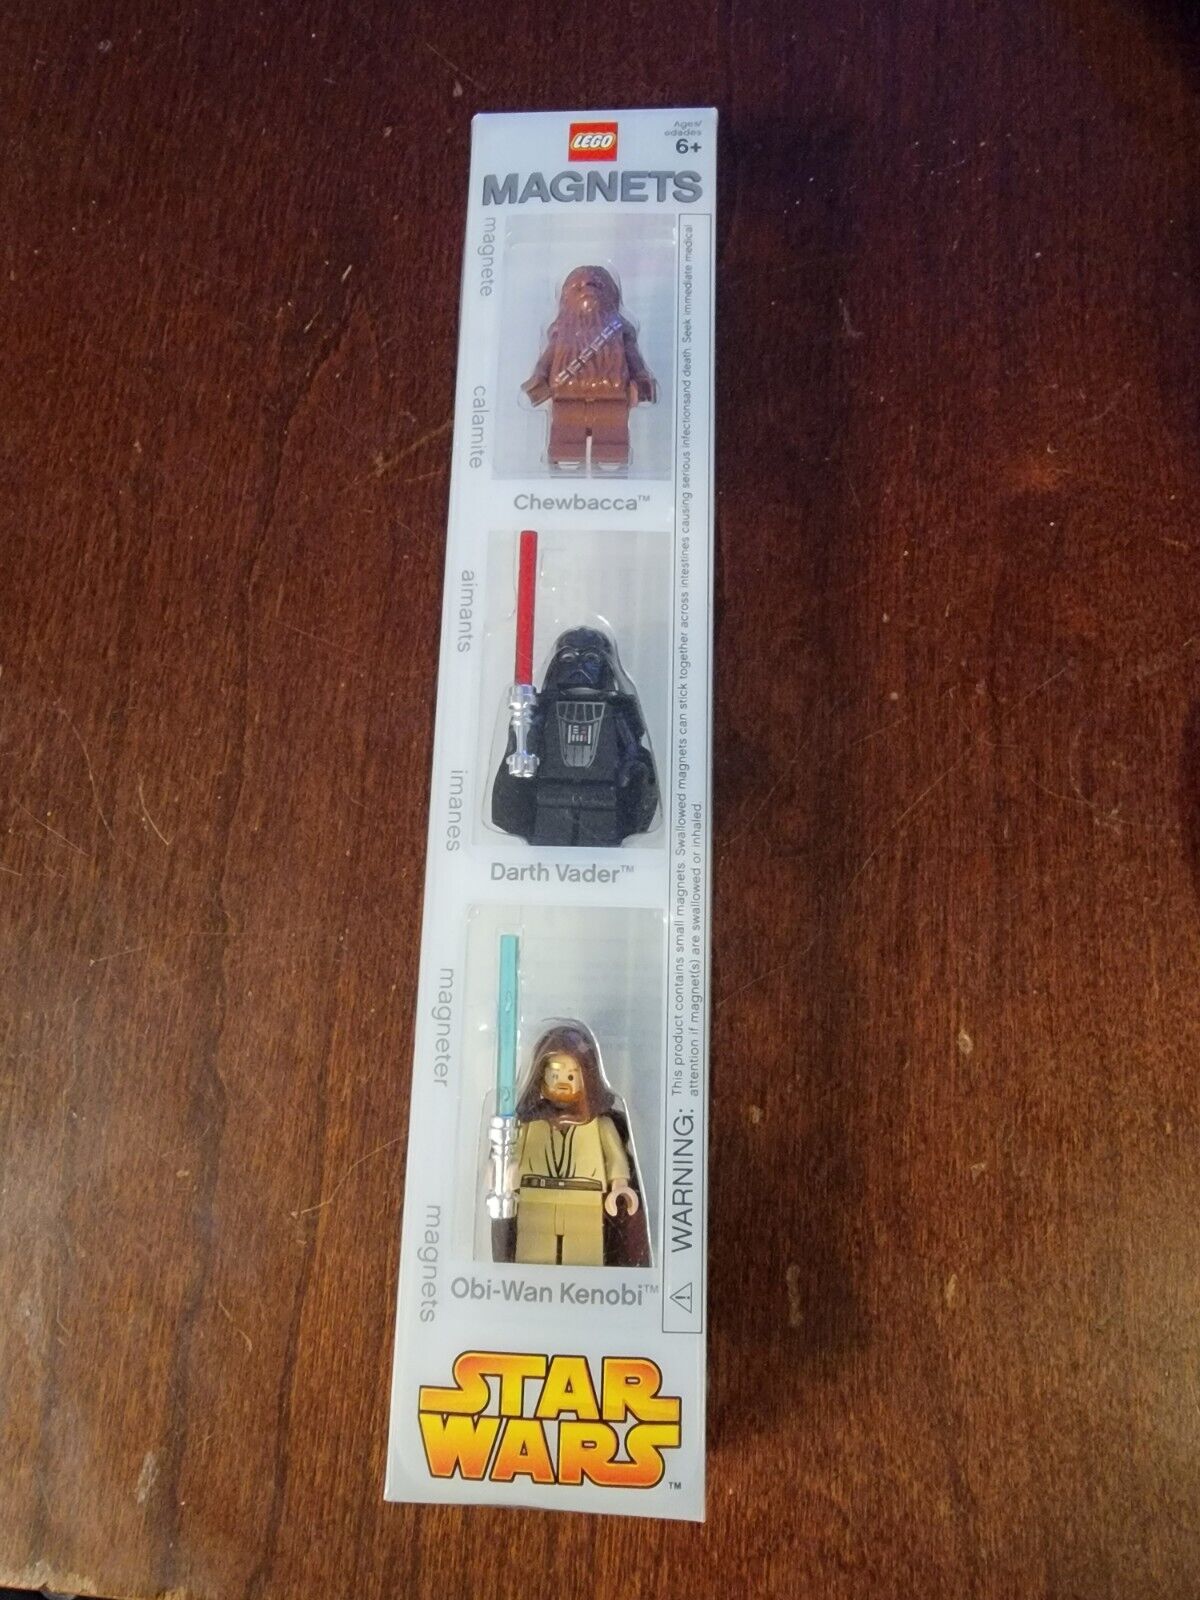 LEGO Star Wars Minifigure Magnet Chewbacca Darth Vader Obi-Wan Kenobi 4269242